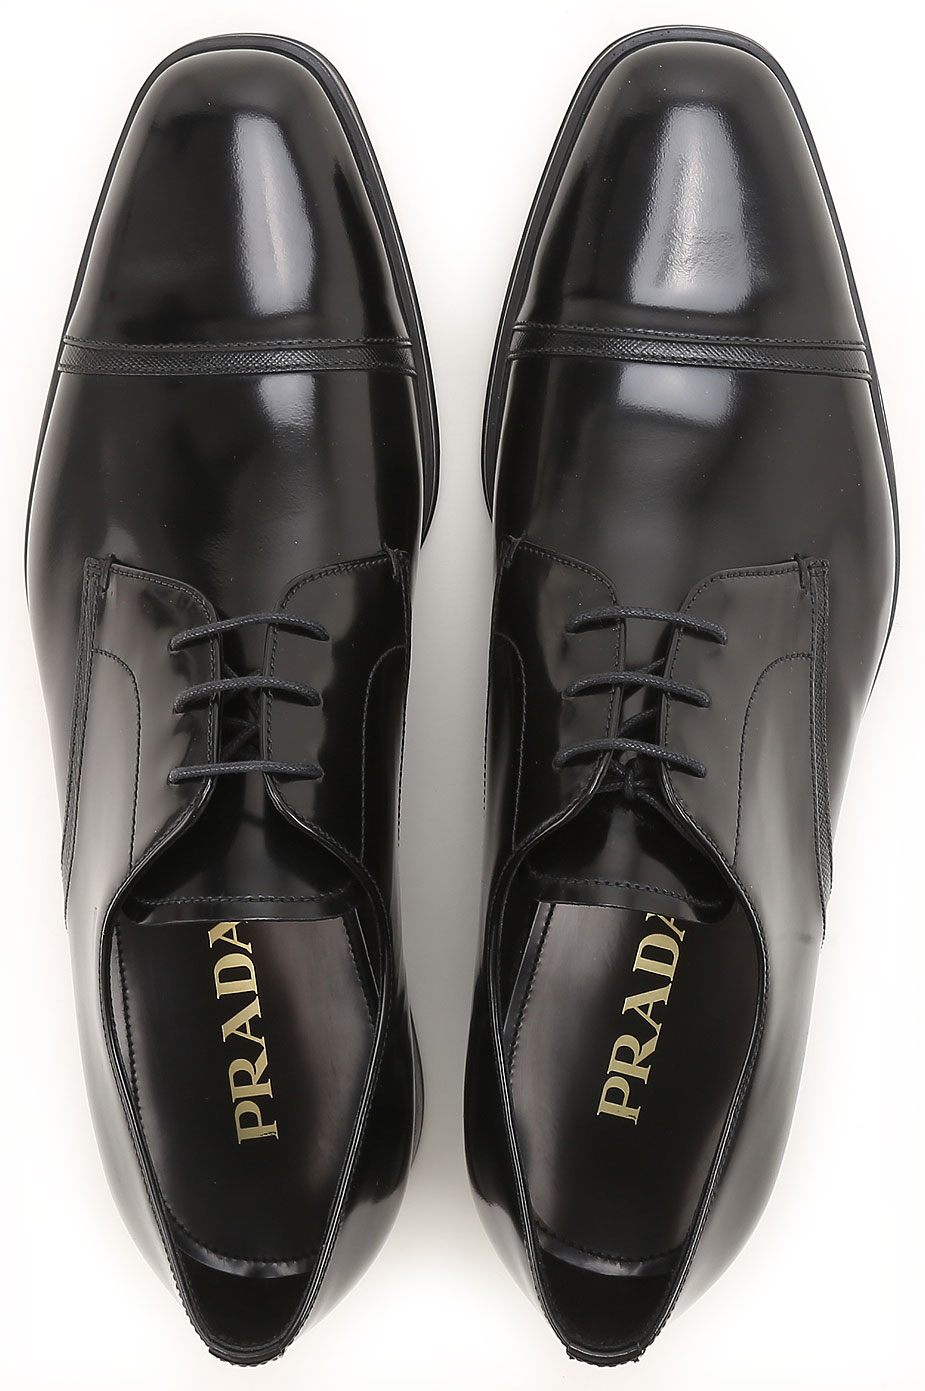 Mens Shoes Prada, Style code: 2ec099-uwu-002